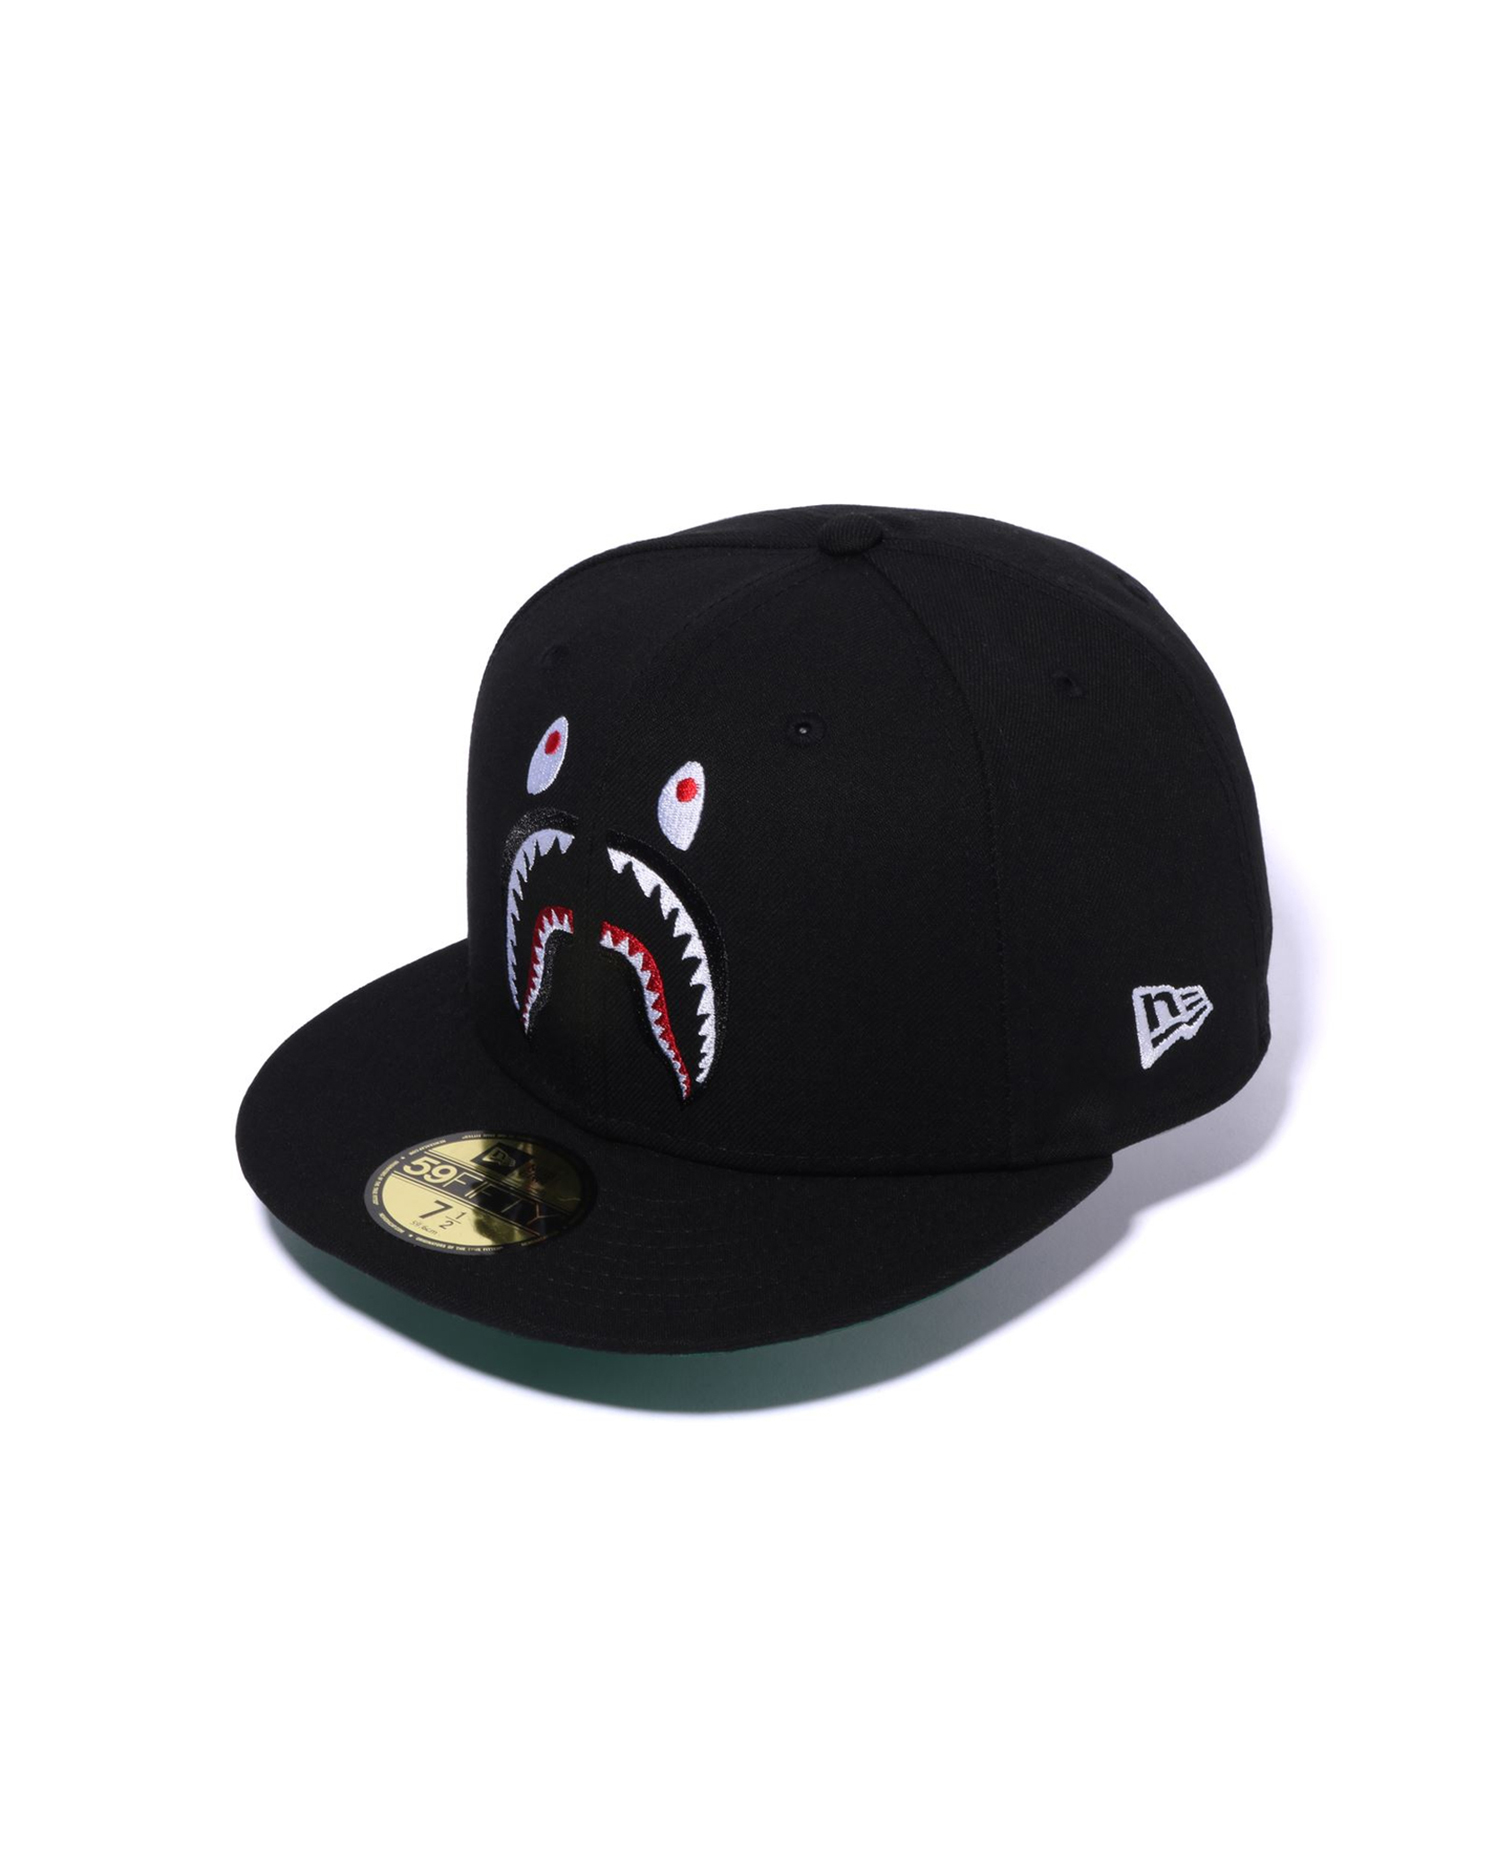 Shop Shark New Era 59Fifty Cap Online | BAPE